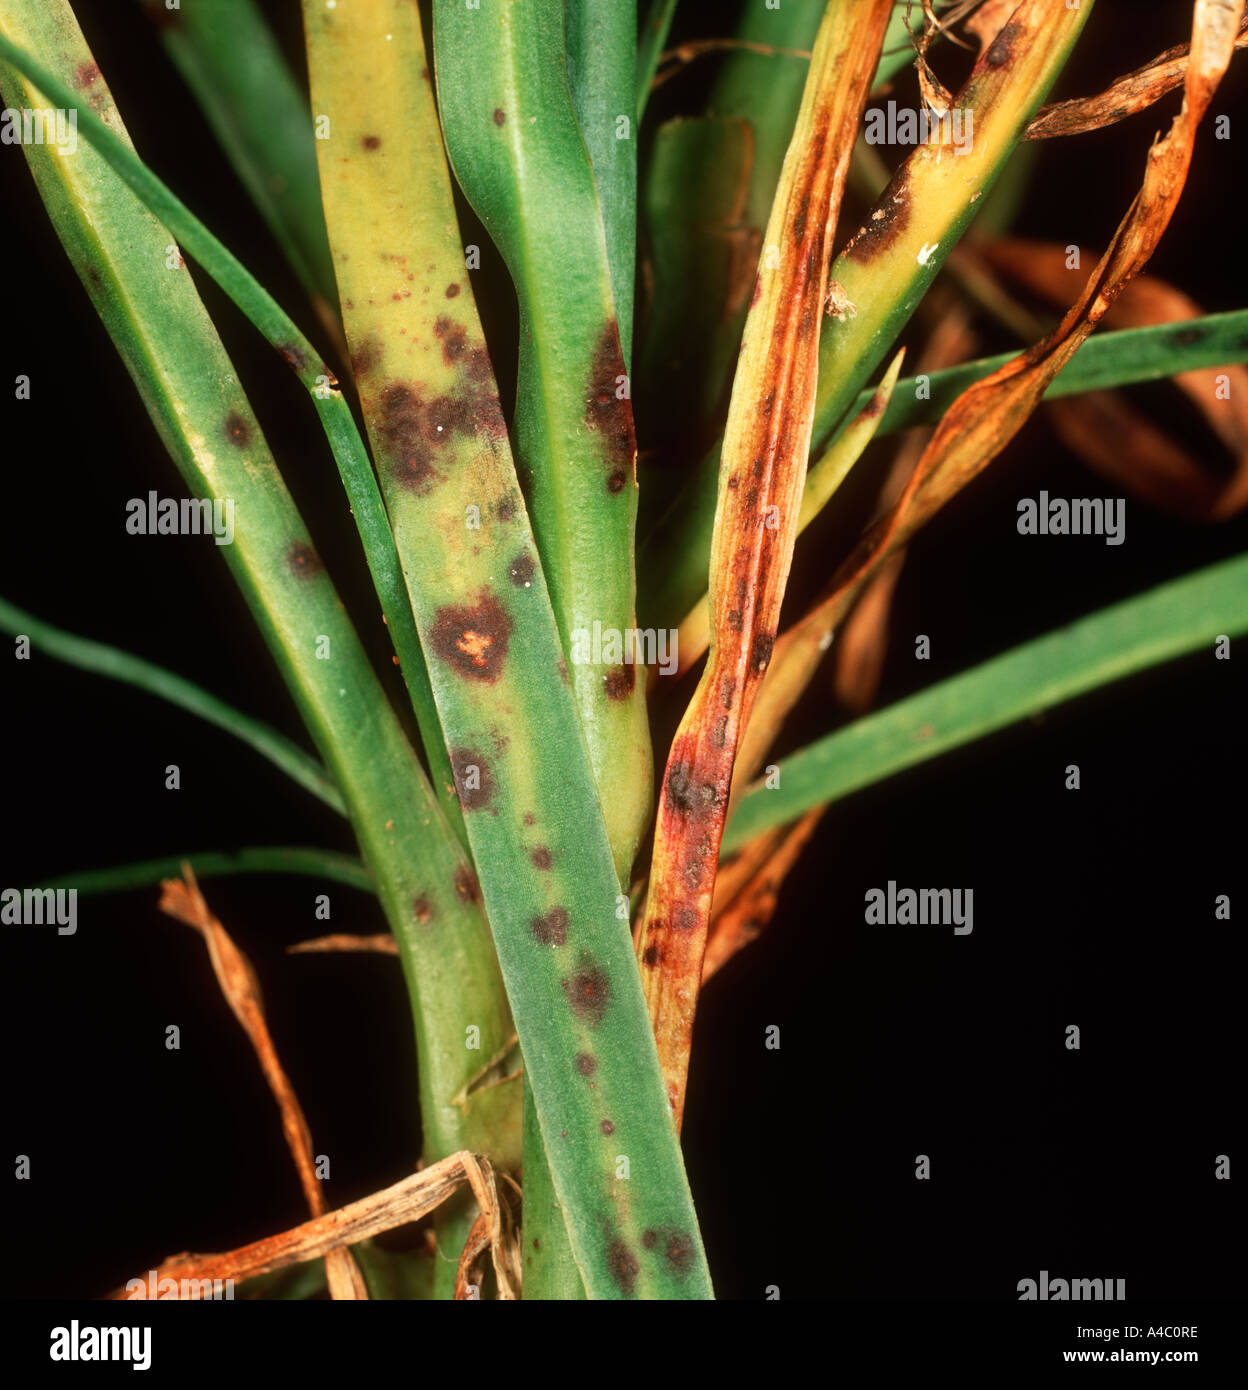 Dianthus che macchia di foglia Septoria dianthi su Garofano Dianthus spp lascia stelo Foto Stock